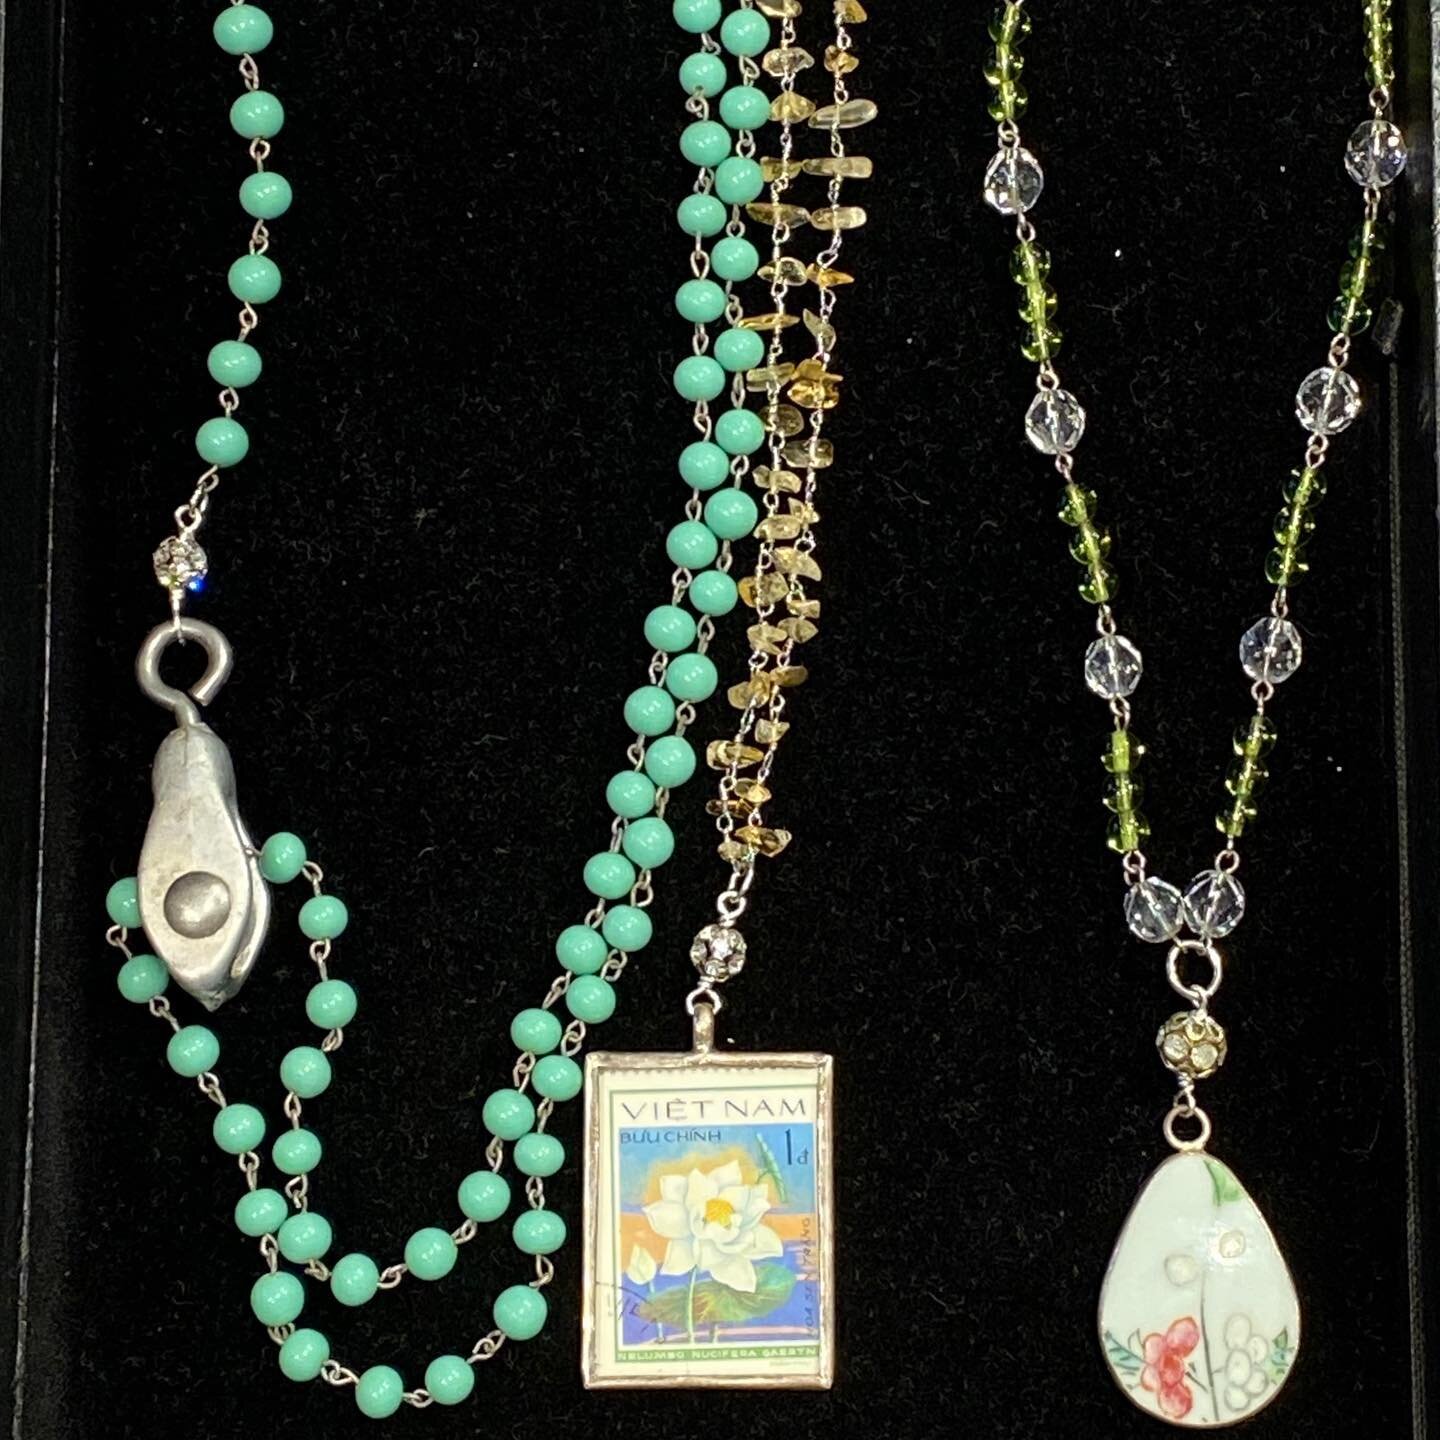 New jewels from 74 Harley Street 🤩!!
@adornmentsdenver @74harleystreet @cherrycreeknorth